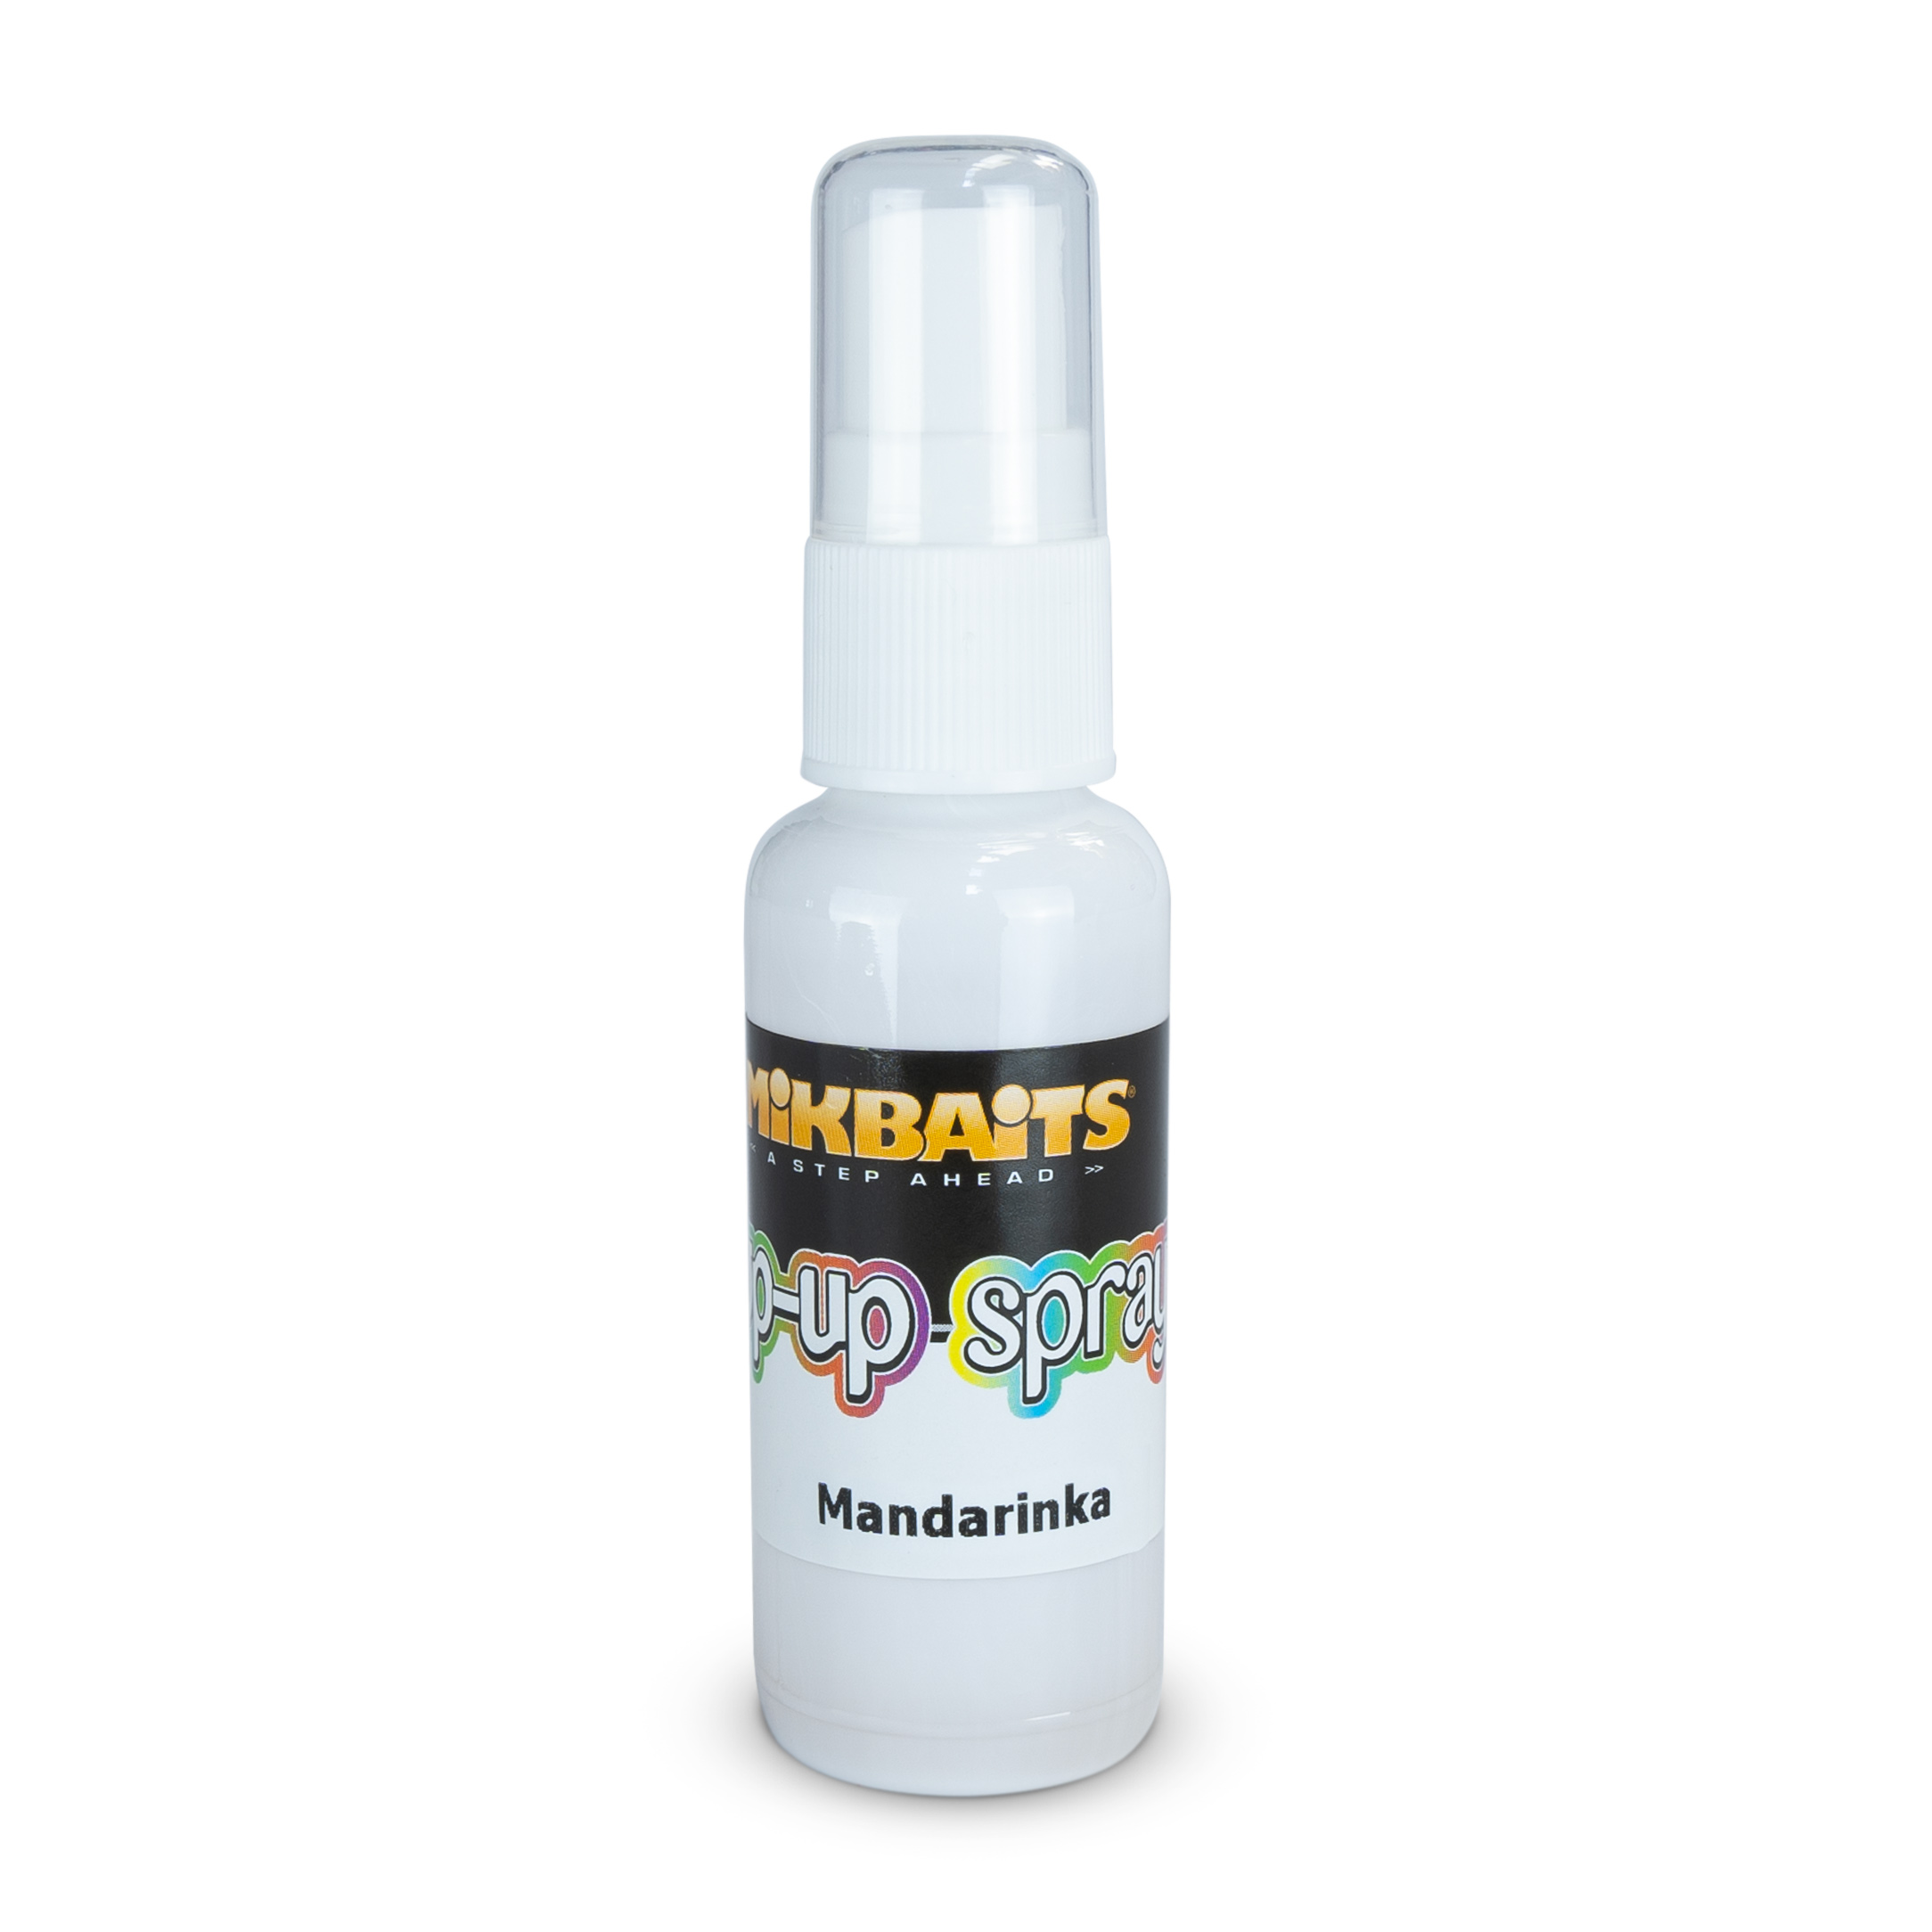 Pop-up spray 30ml - Mandarinka